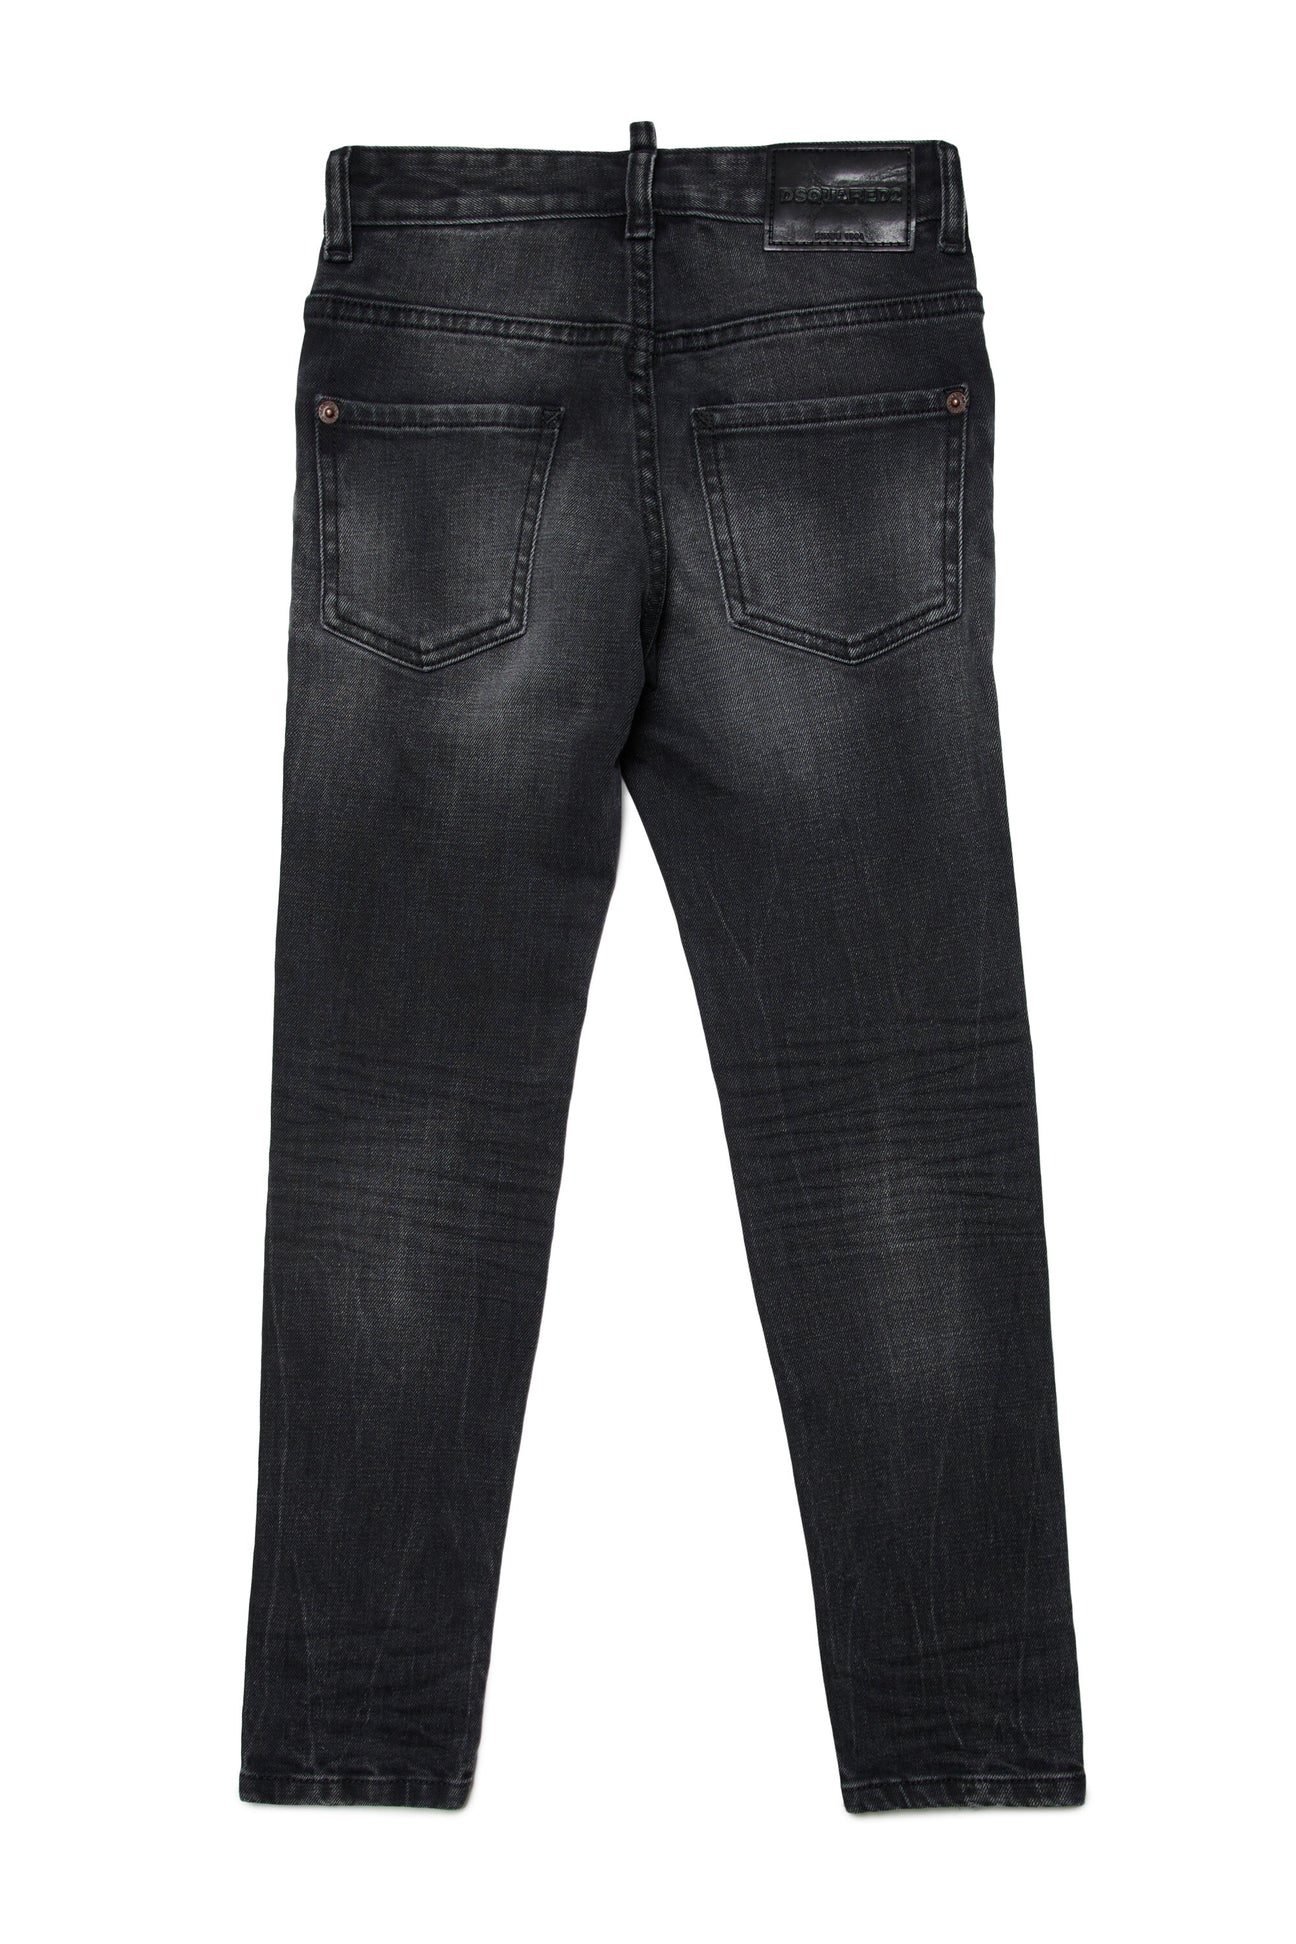 Black shaded skinny jeans - Skater Black shaded skinny jeans - Skater